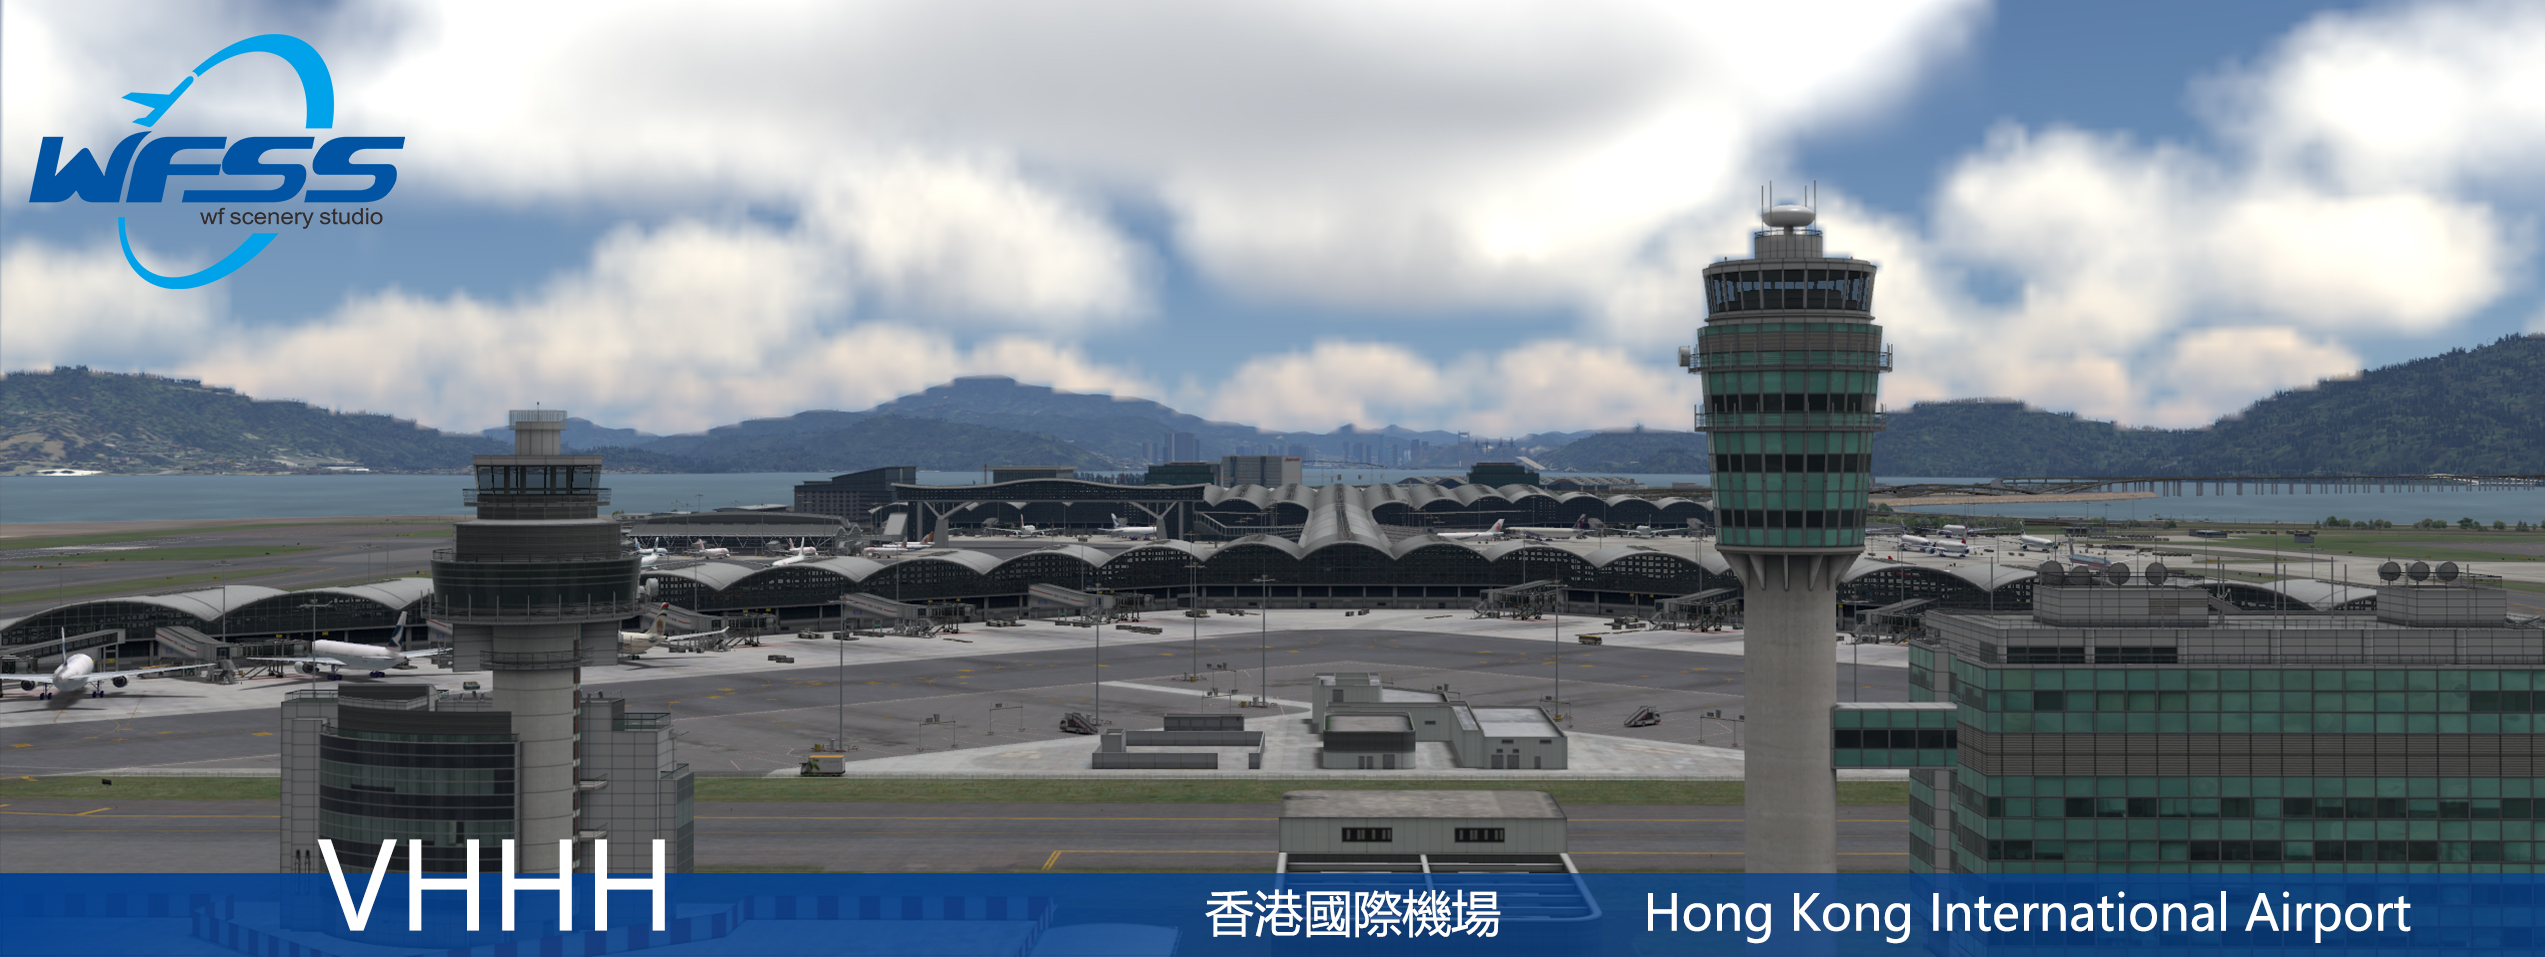 WFSS-香港国际机场发布-7120 